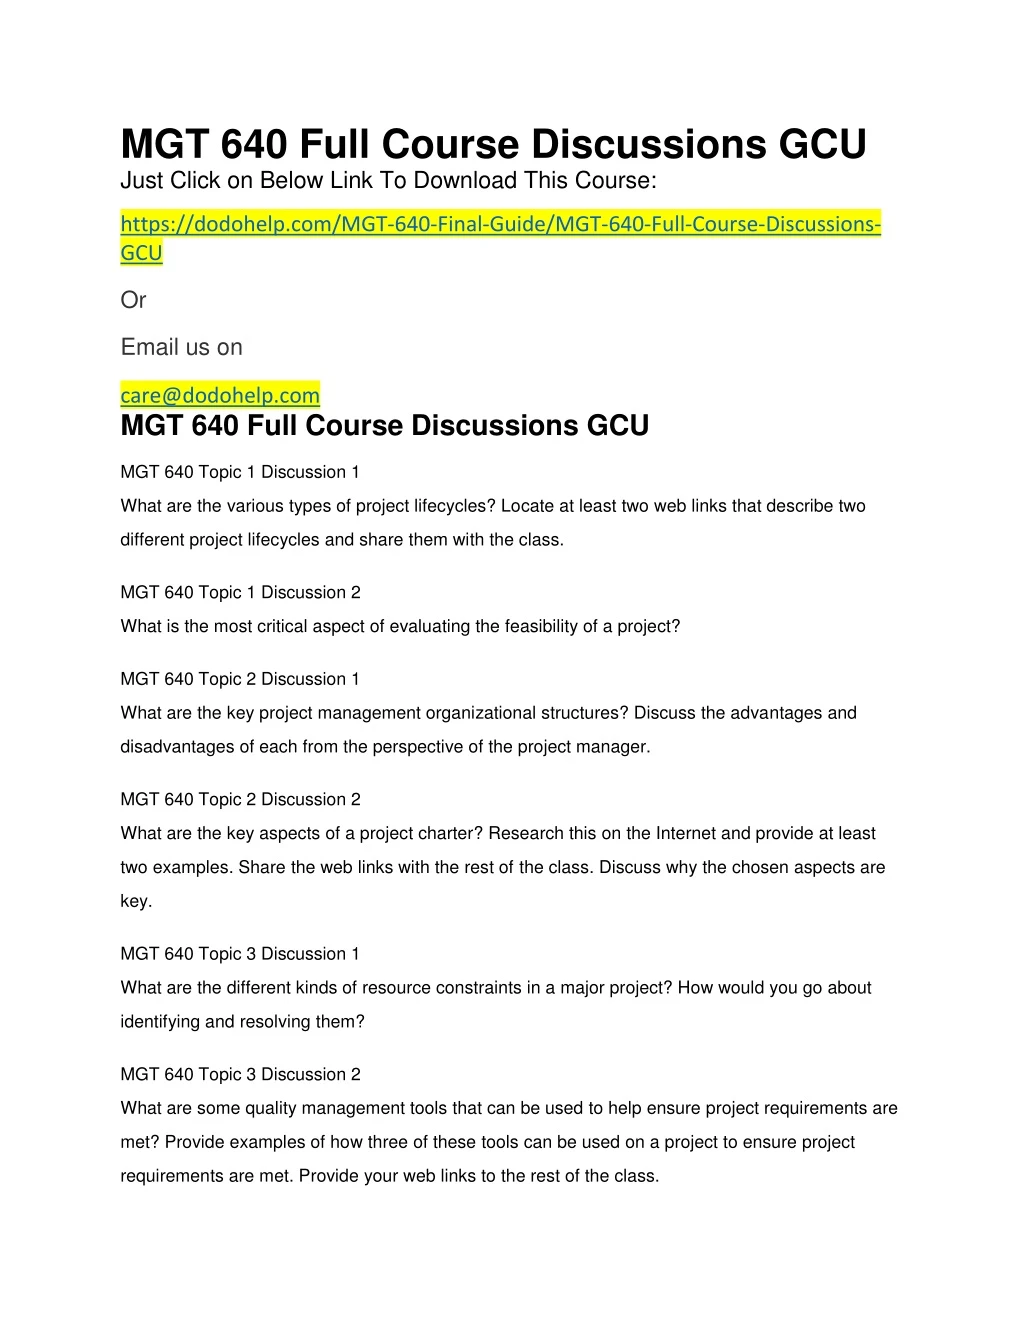 mgt 640 full course discussions gcu just click